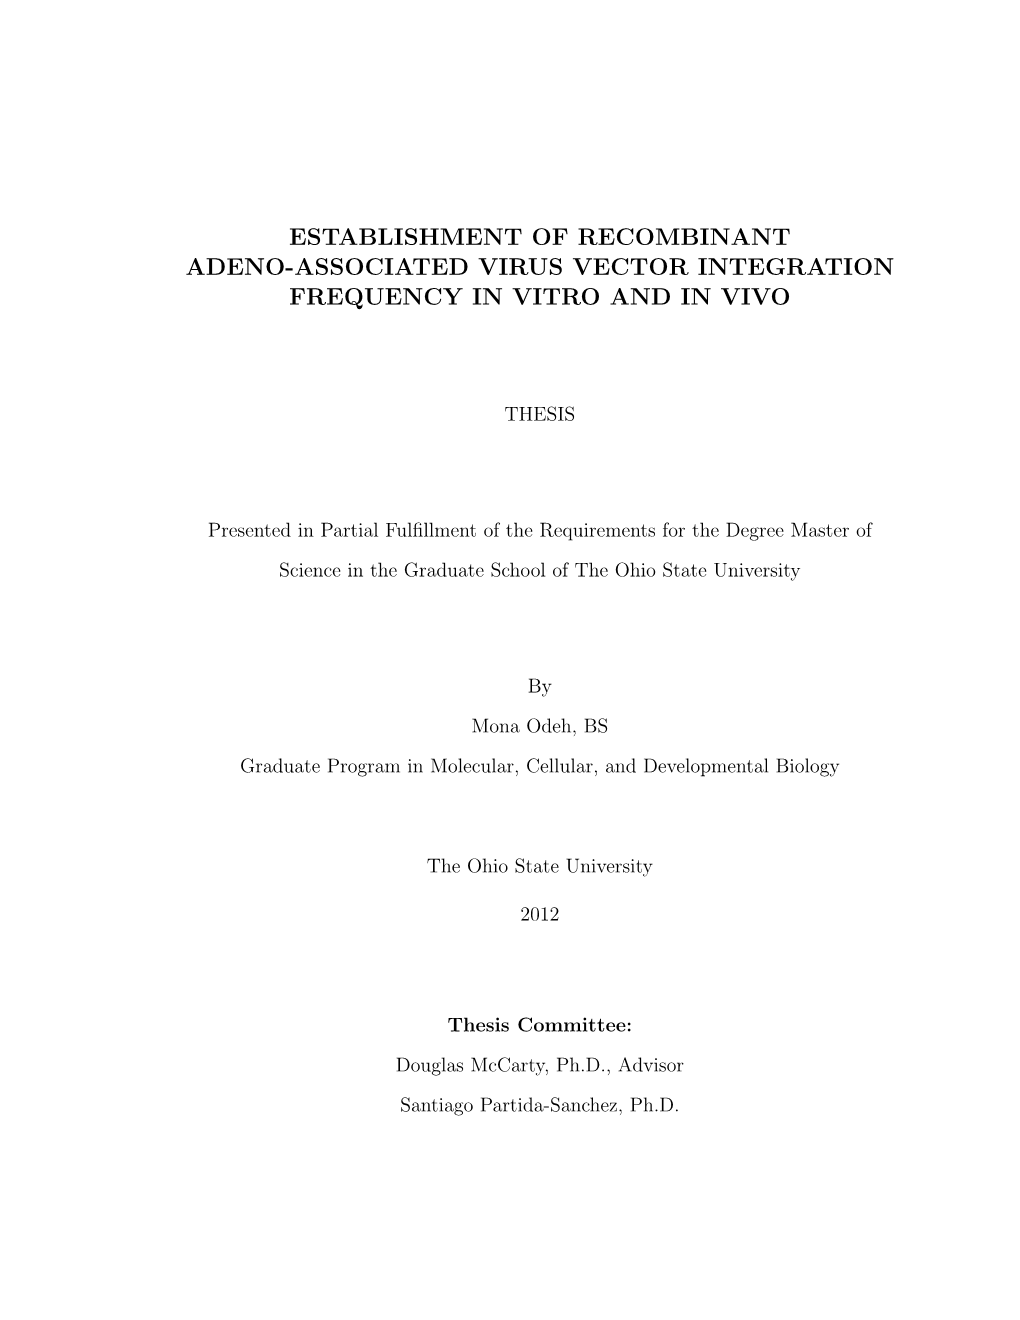 Establishment of Recombinant Adeno-Associated Virus Vector Integration Frequency in Vitro and in Vivo